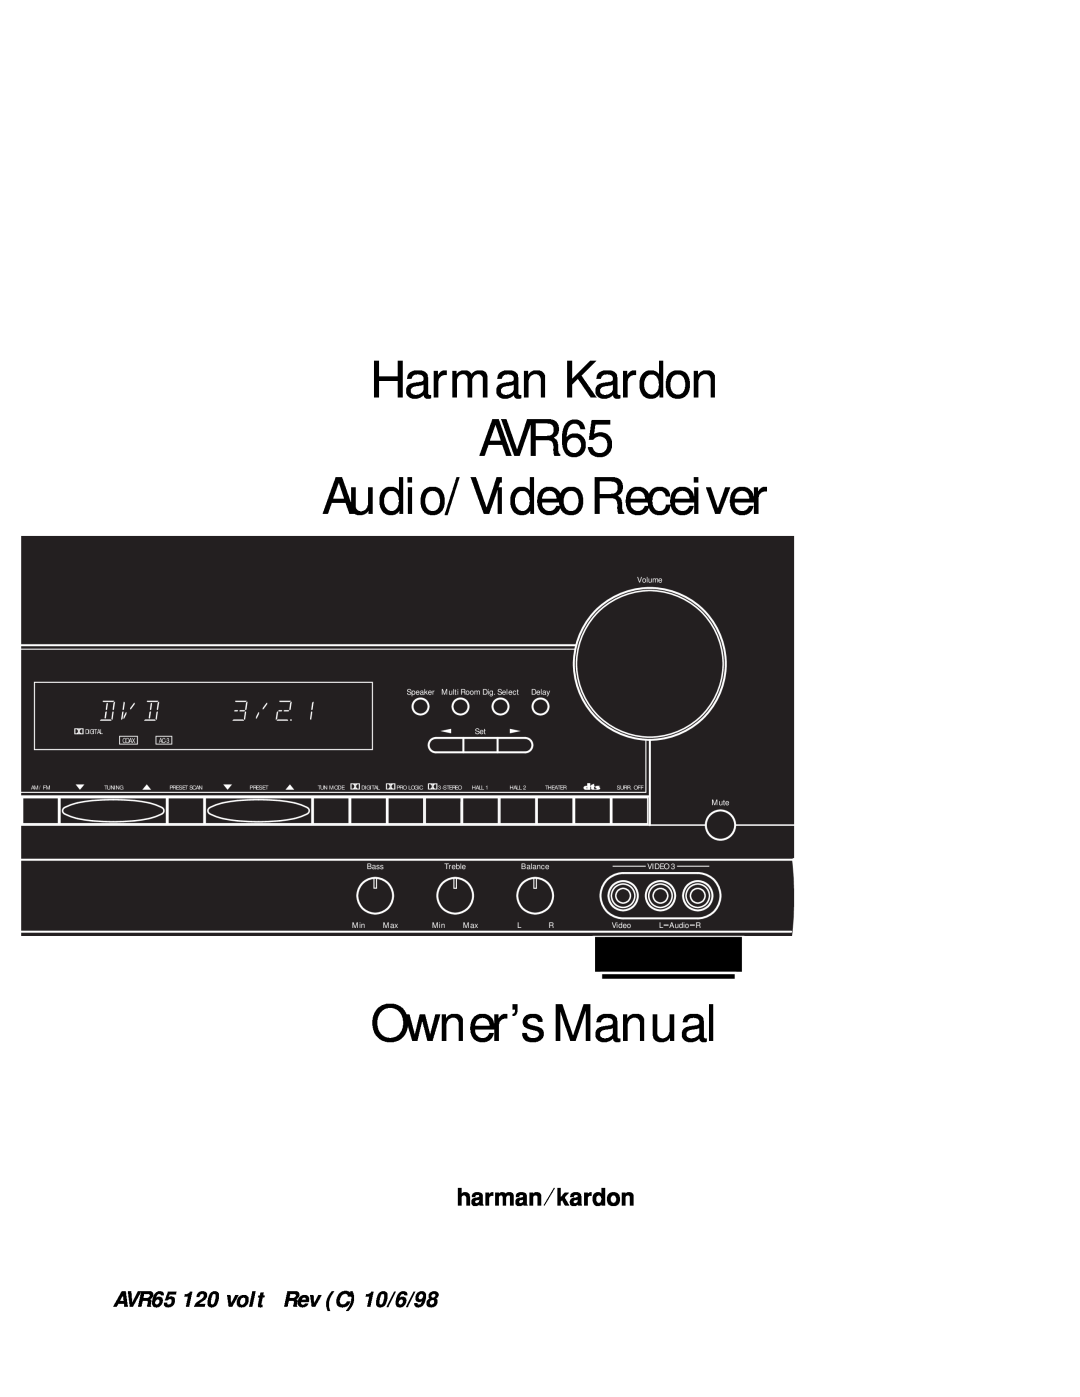 Harman-Kardon manual Harman Kardon AVR65 Audio/VideoReceiver, AVR65 120 volt Rev C 10/6/98, Digital, Coax, AC-3 